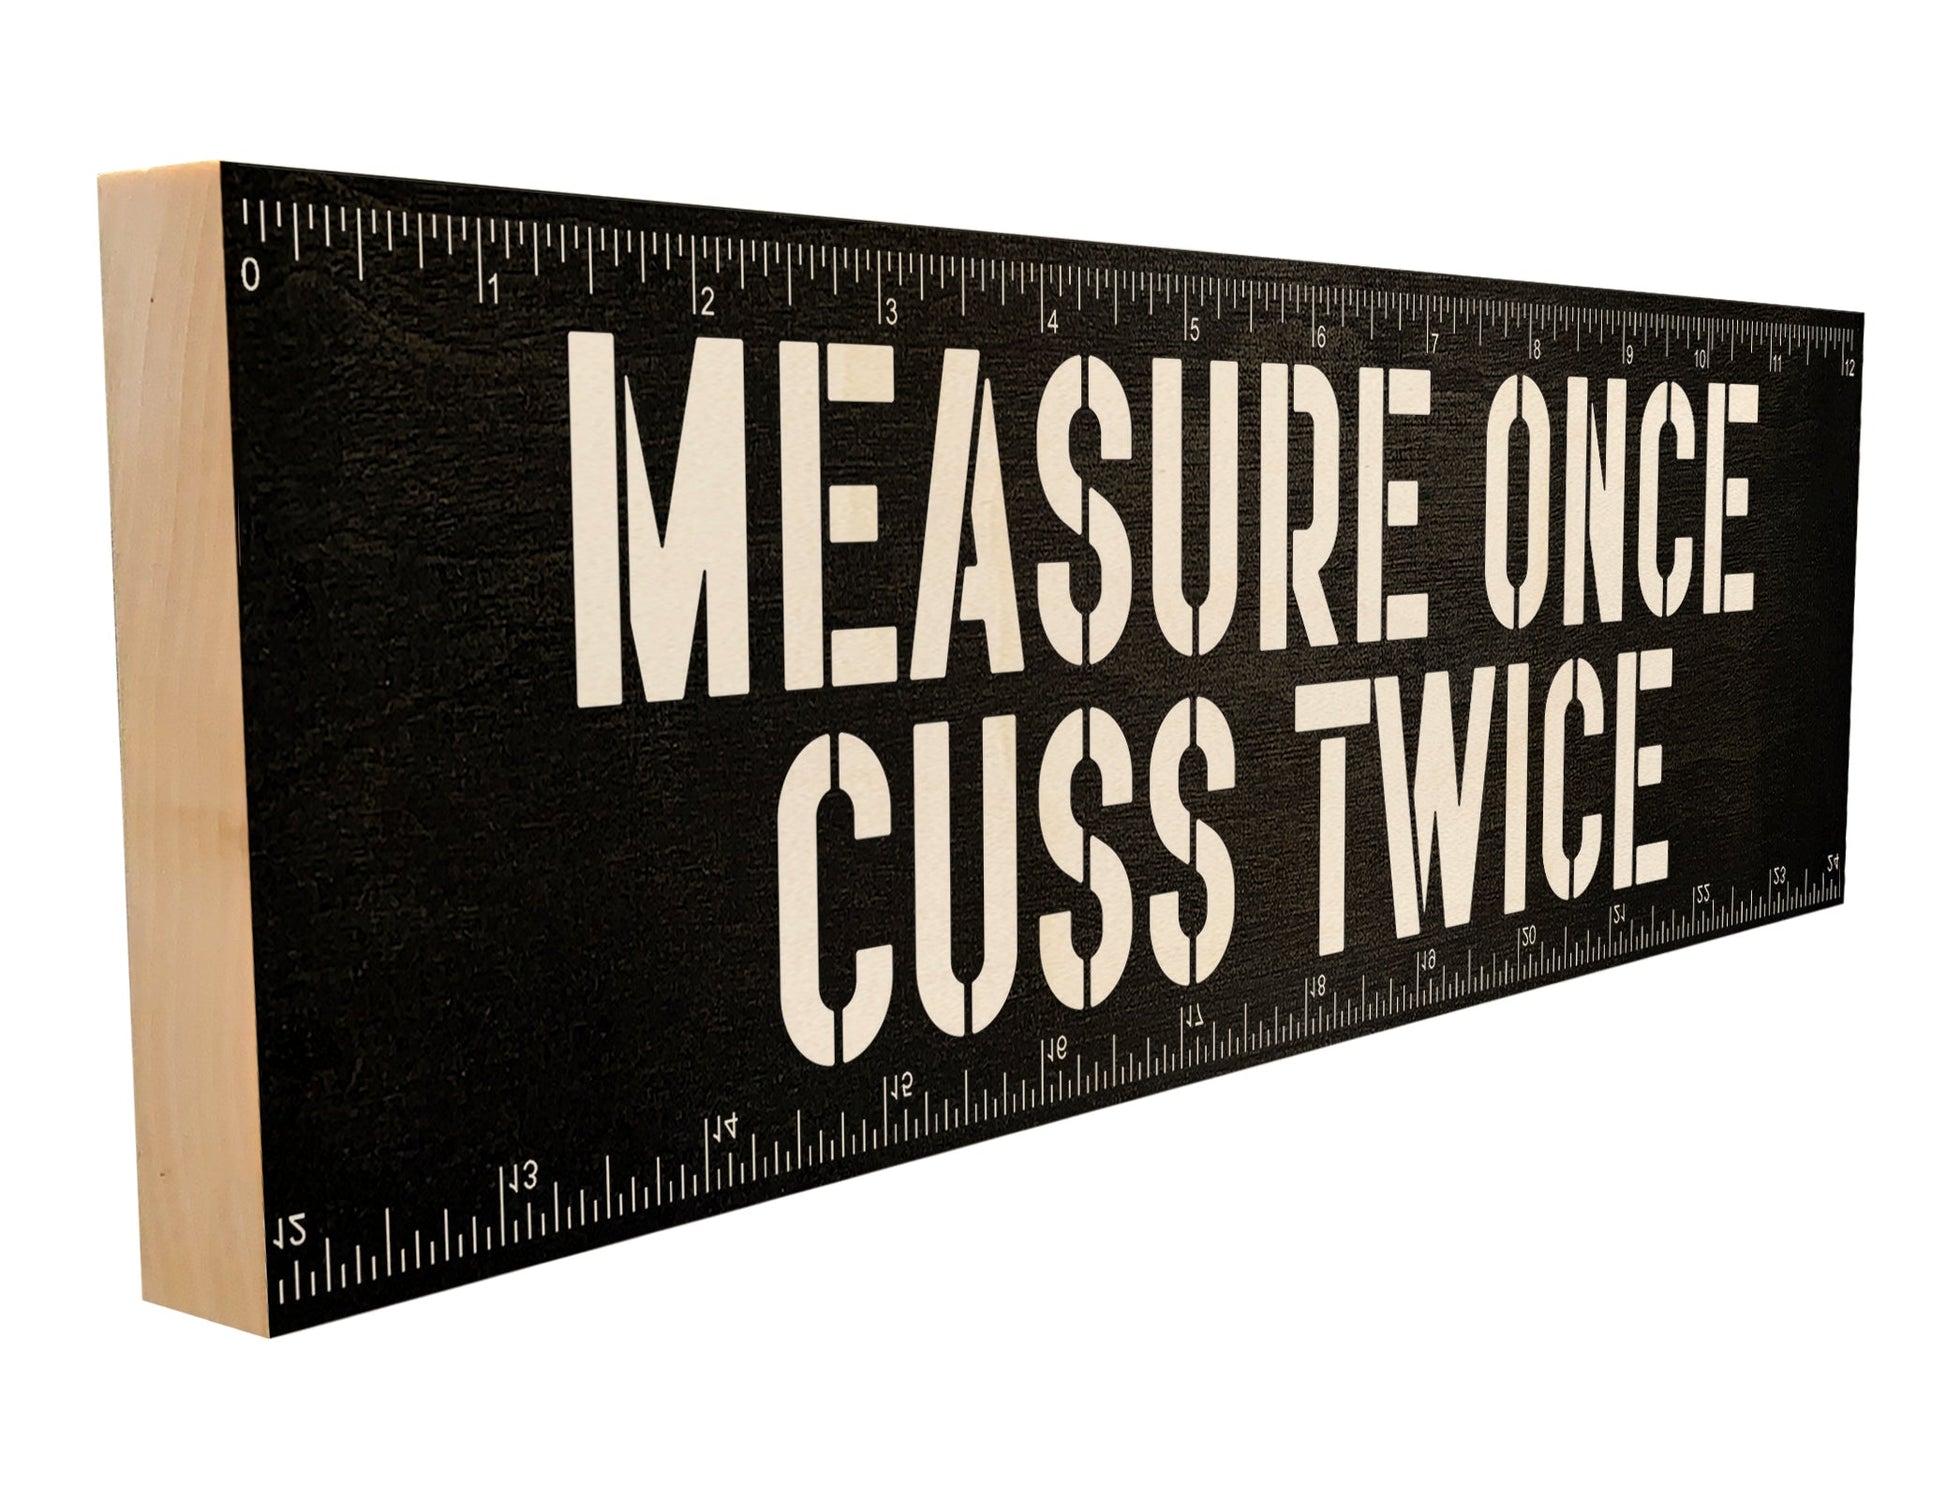 Measure Once. Cuss Twice.